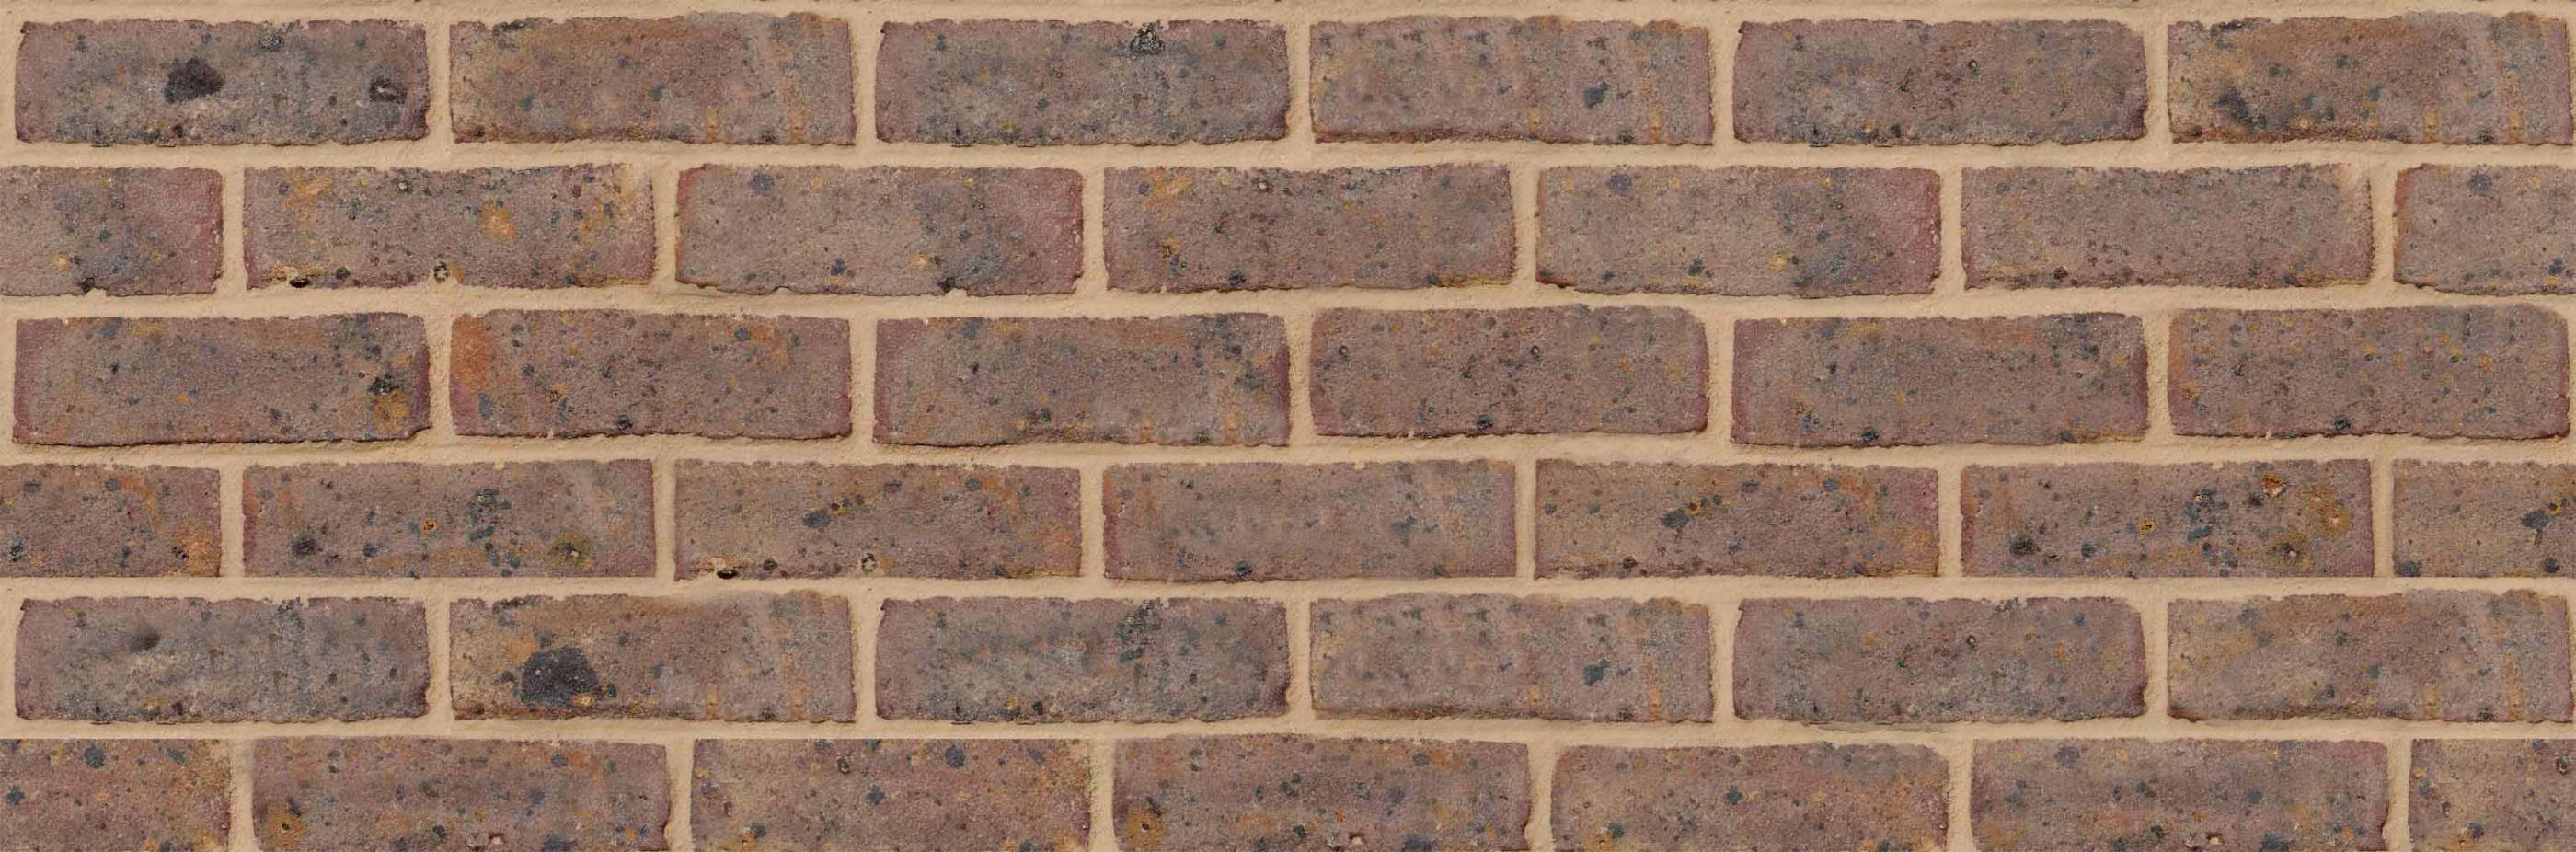 Freshfield Lane Selected Dark Clay Brick 